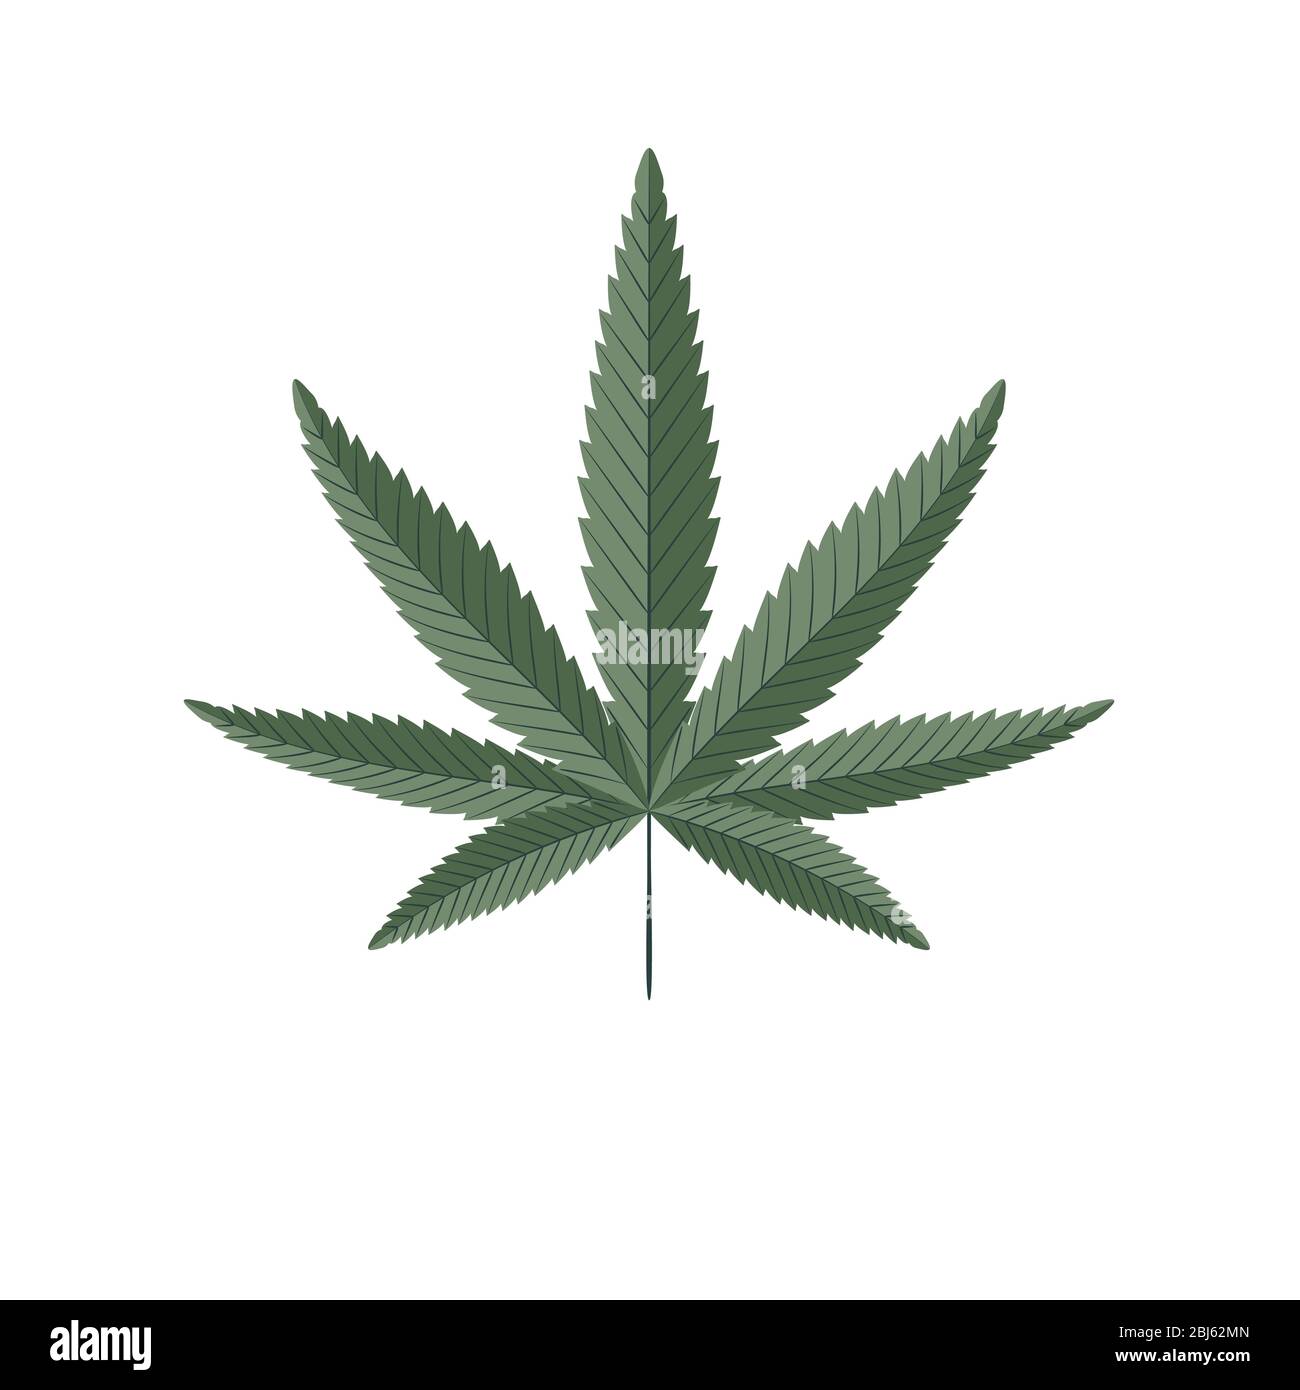 Cannabis grünes Blatt auf weiß isoliert. Hanf Pflanze Vektor Illustration. Stock Vektor